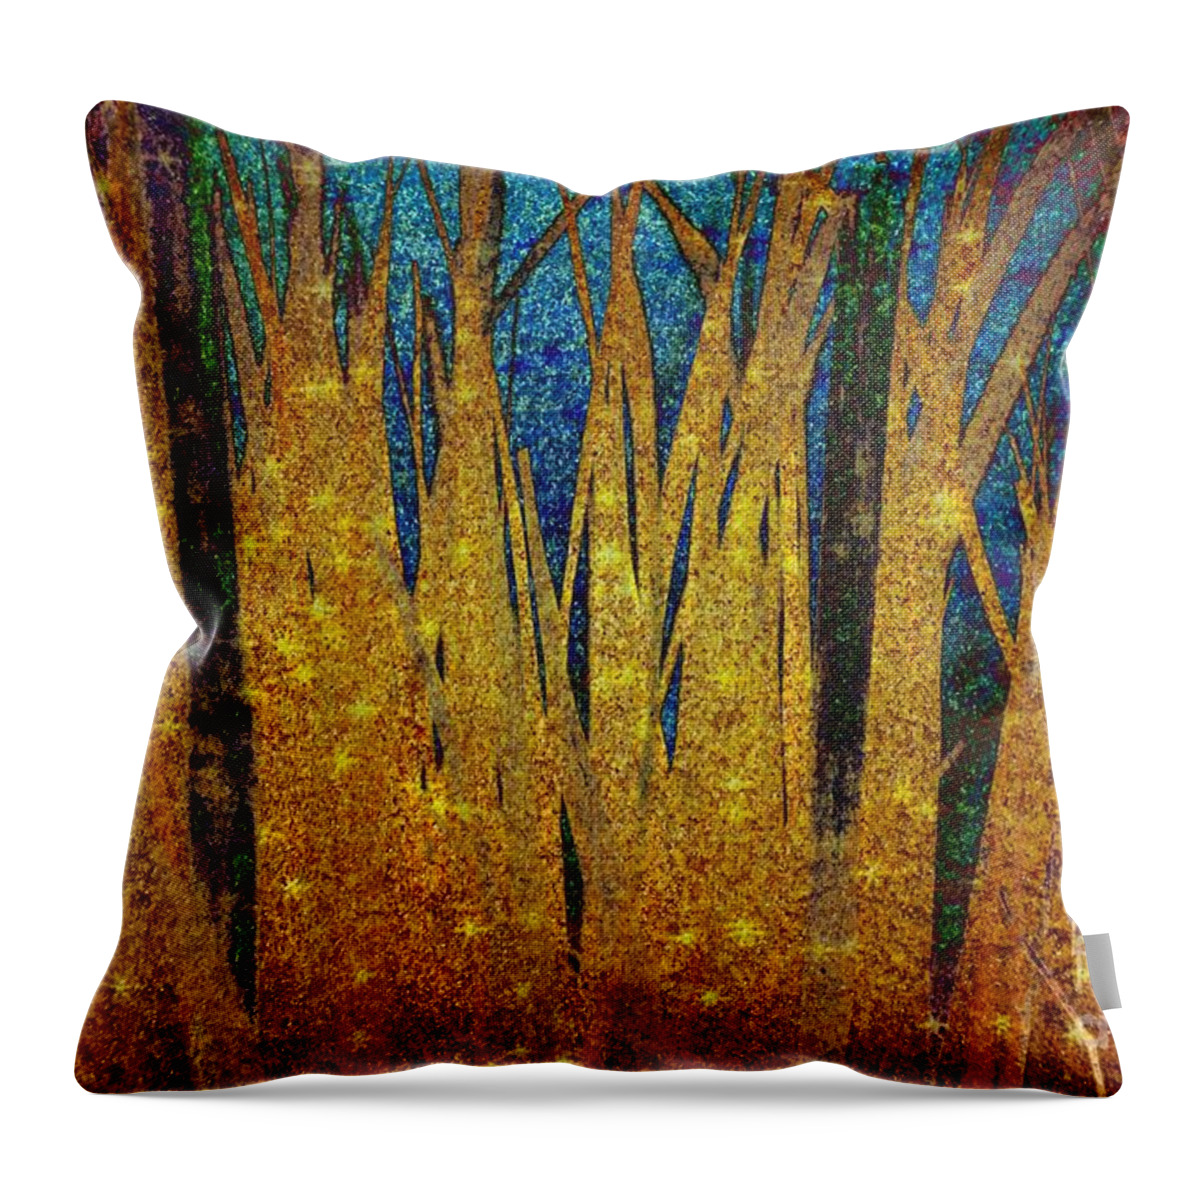 Night Grass Throw Pillow featuring the digital art Night Grass by Darla Wood